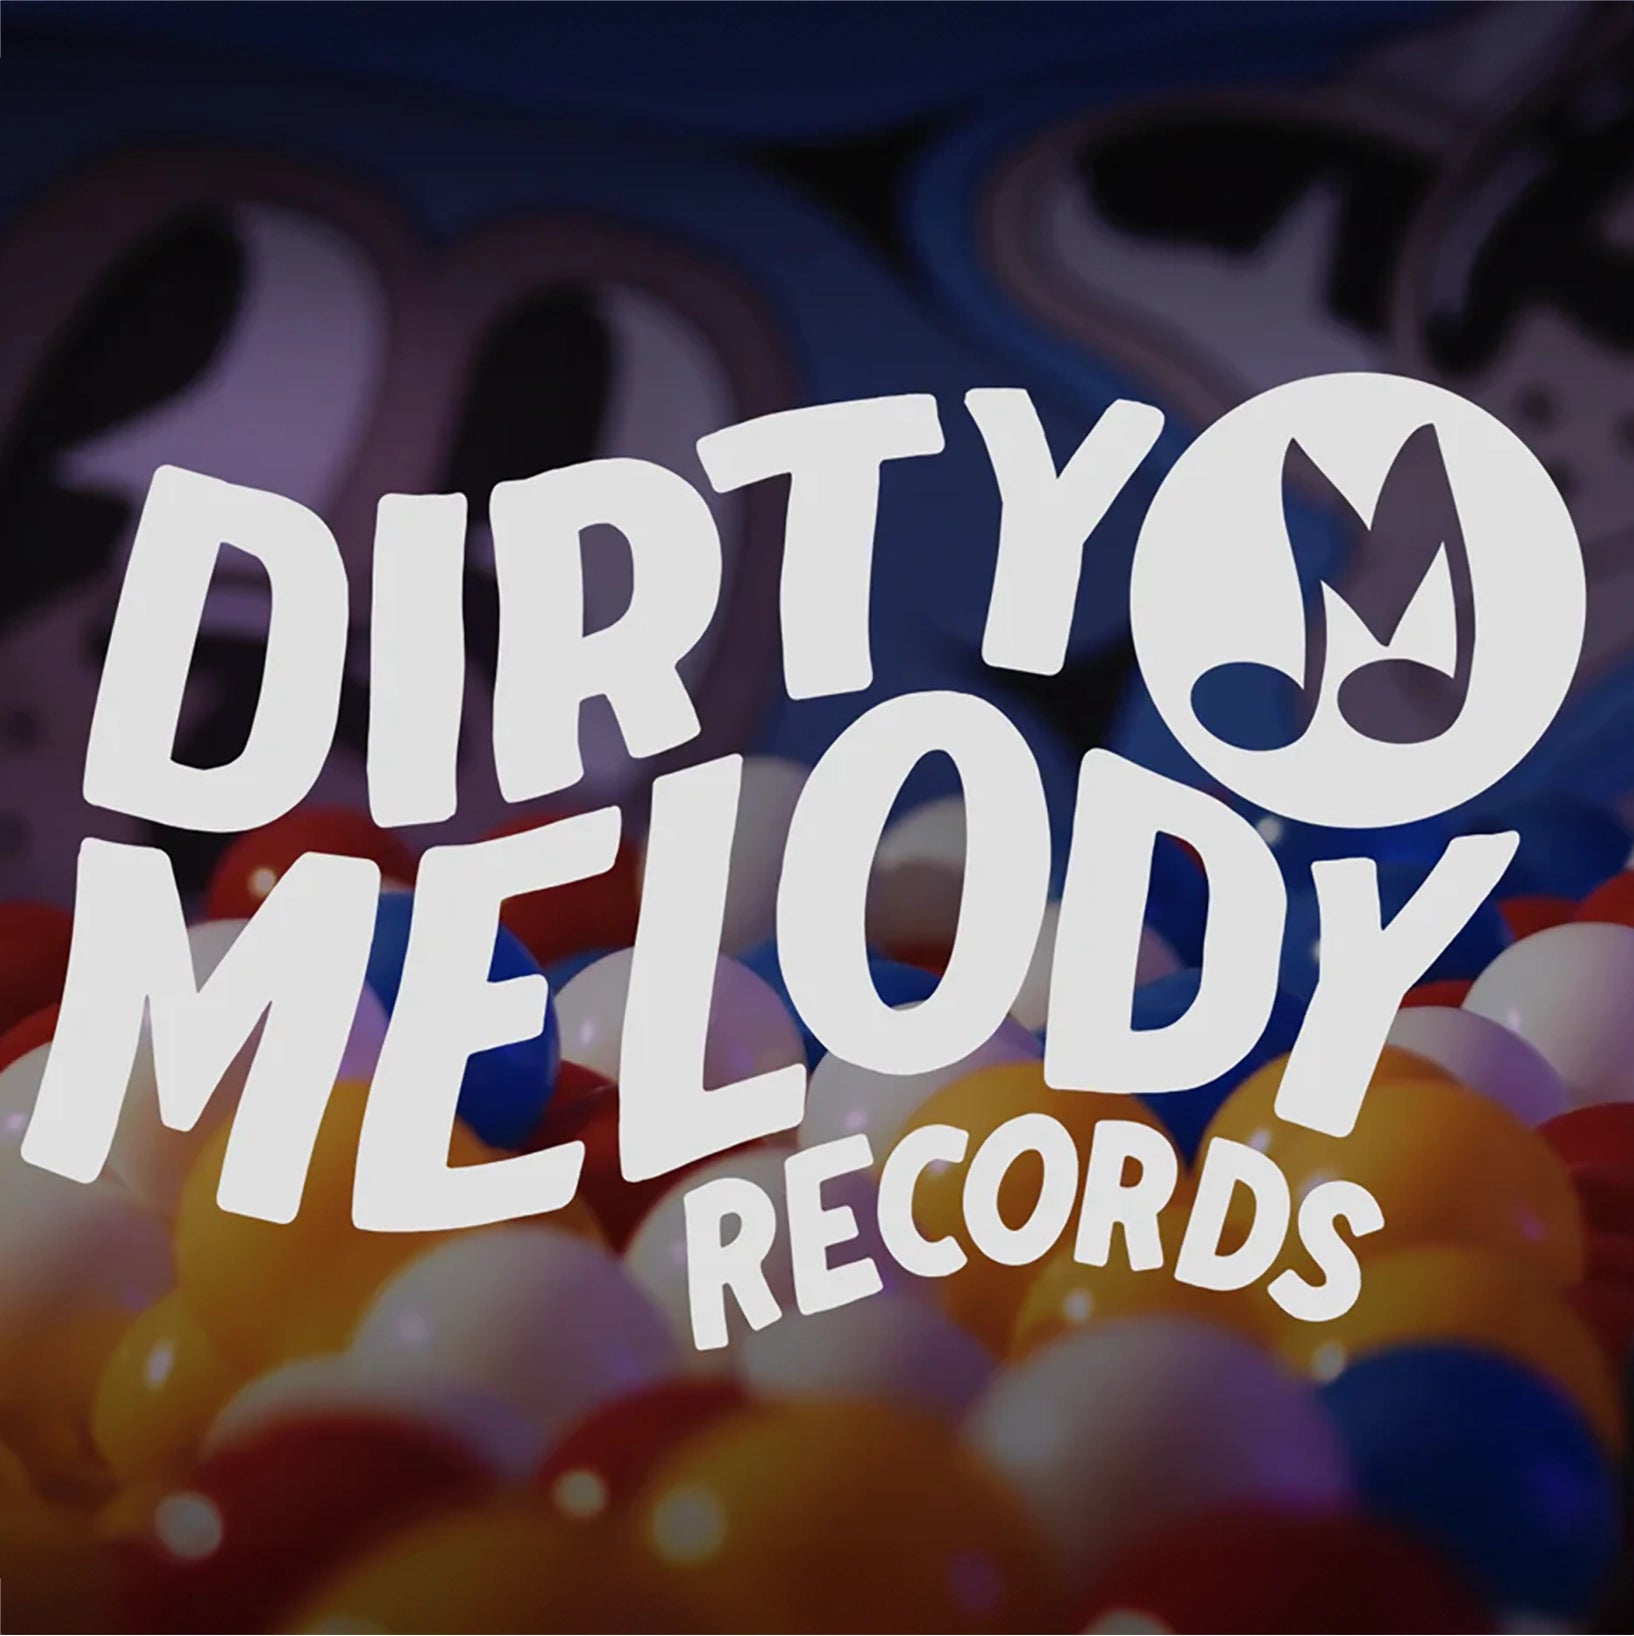 Dirty melody records xxx triple vinyl summer 2021 mega release - Dudes Factory